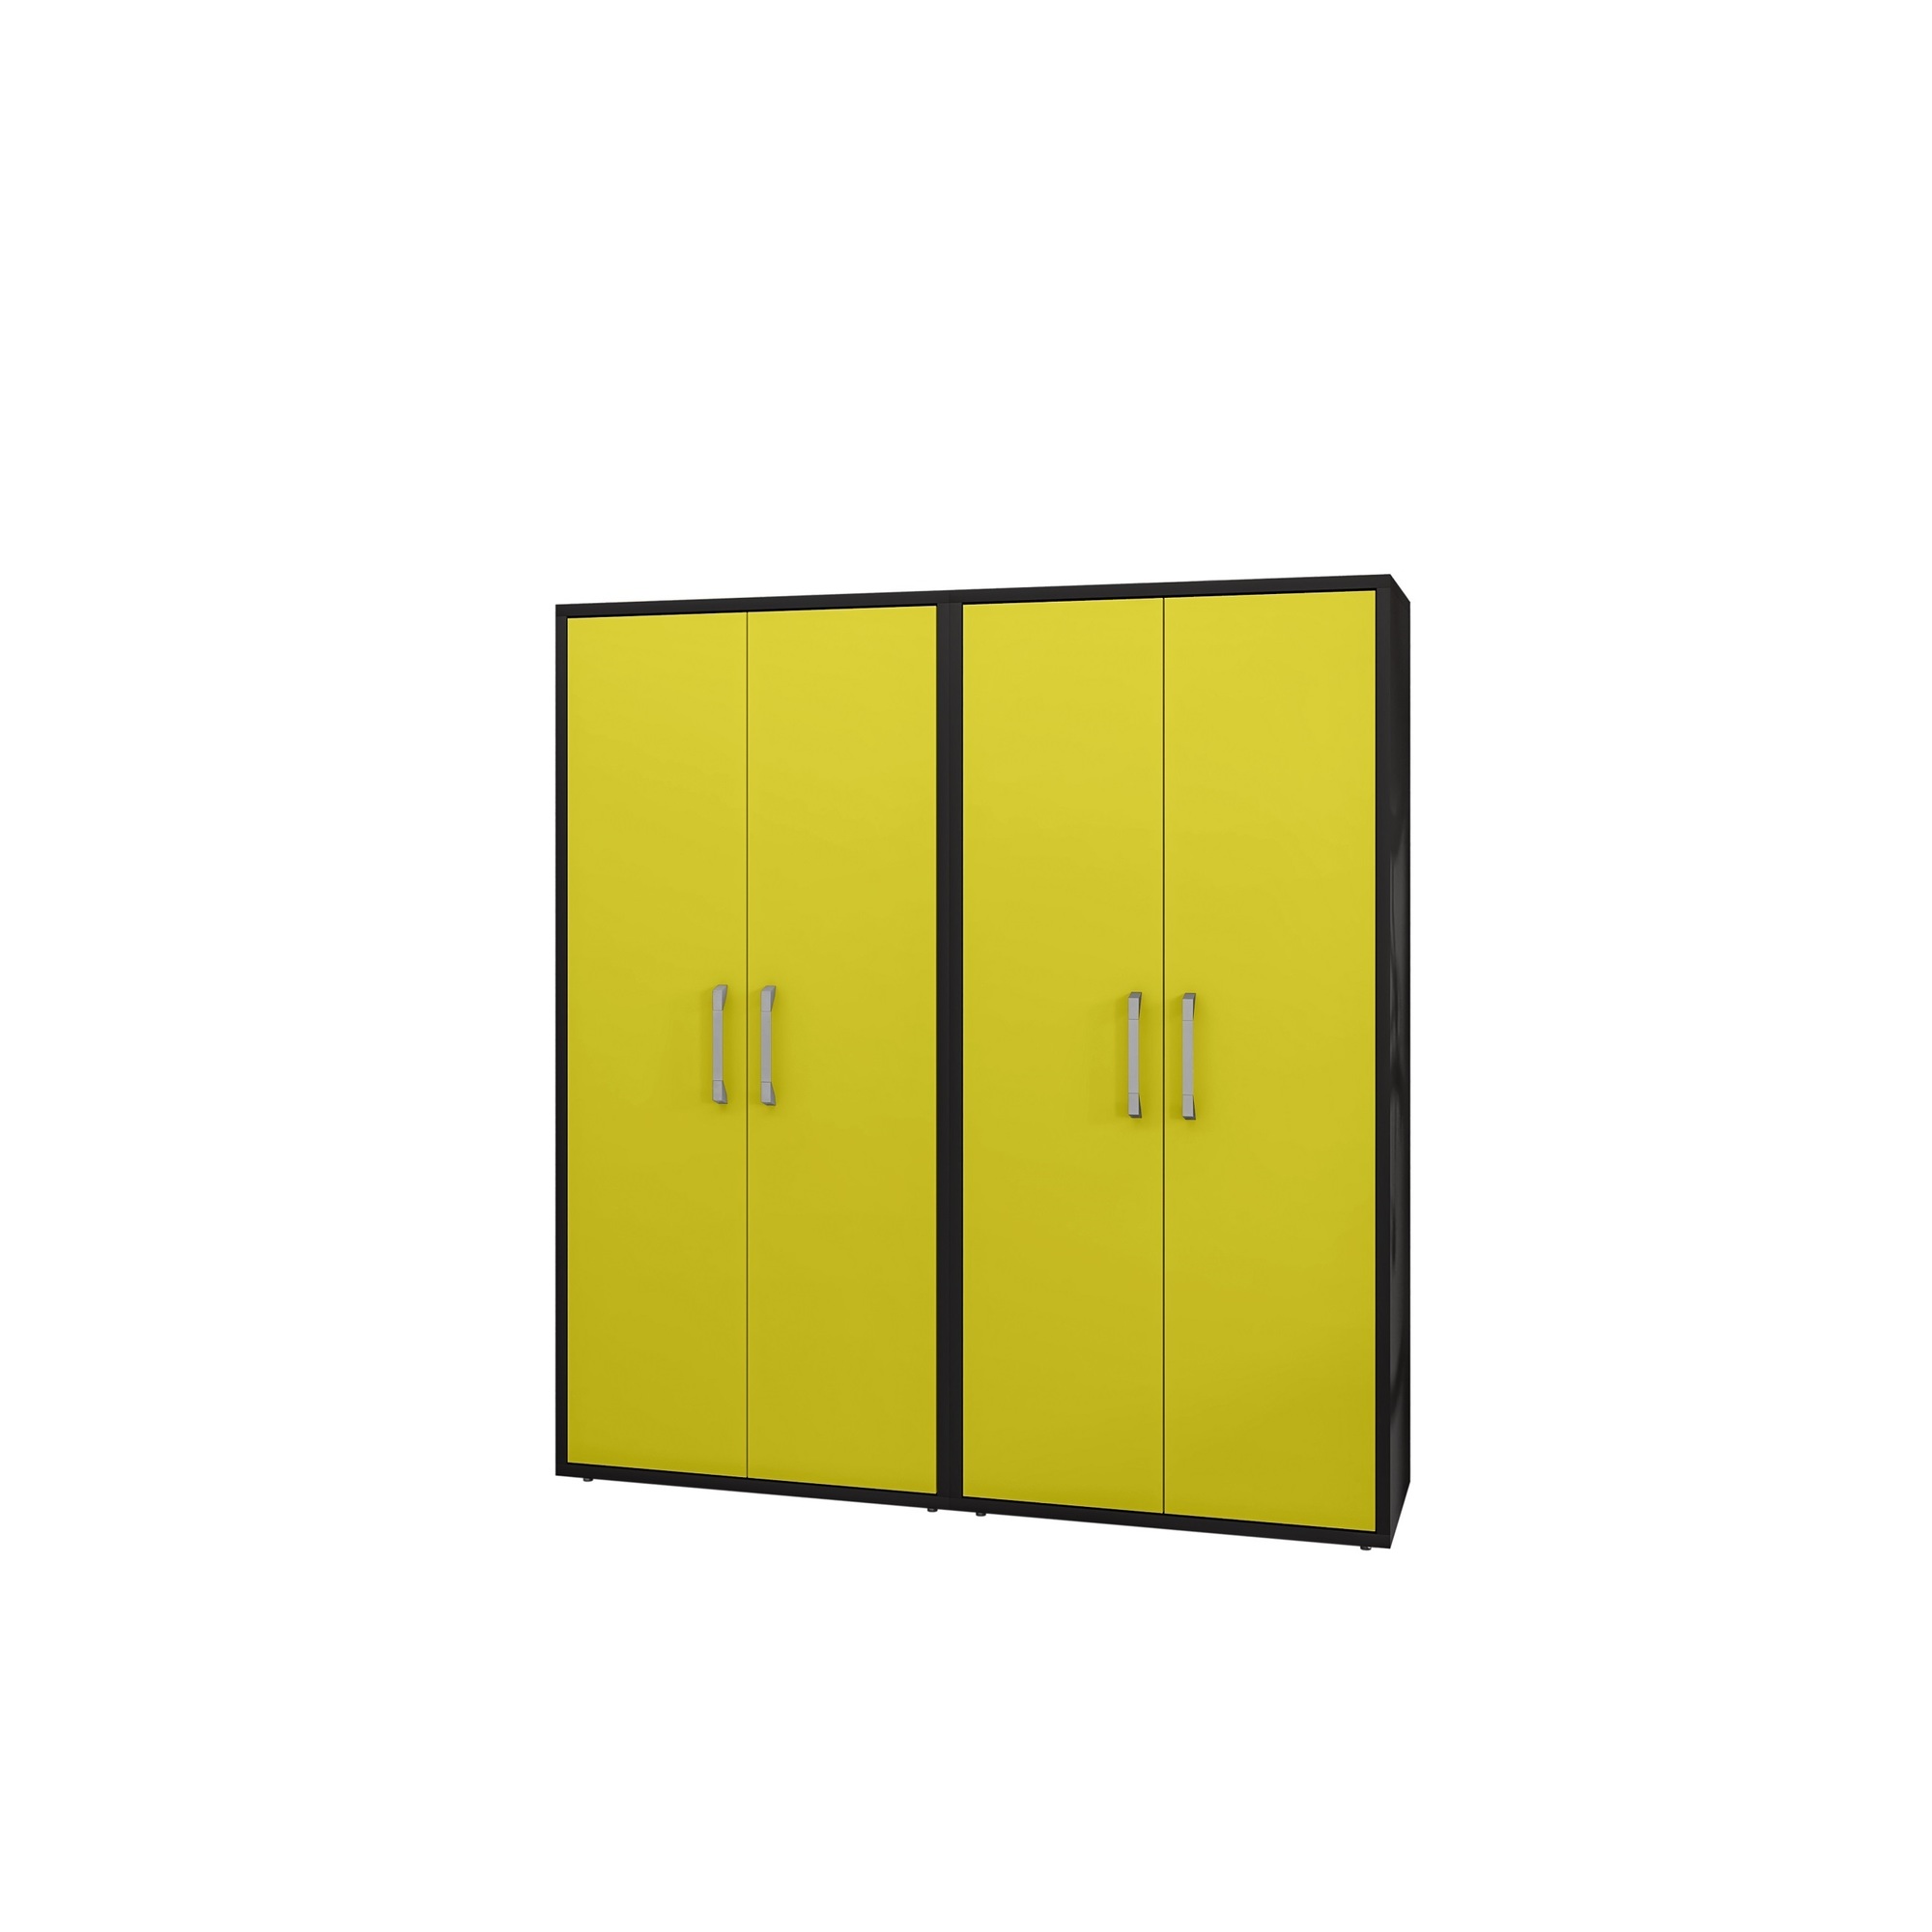 Manhattan Comfort, Eiffel Storage Cabinet in Black Yellow Set of 2 Height 73.43 in, Width 70.86 in, Color Yellow, Model 2-250BMC